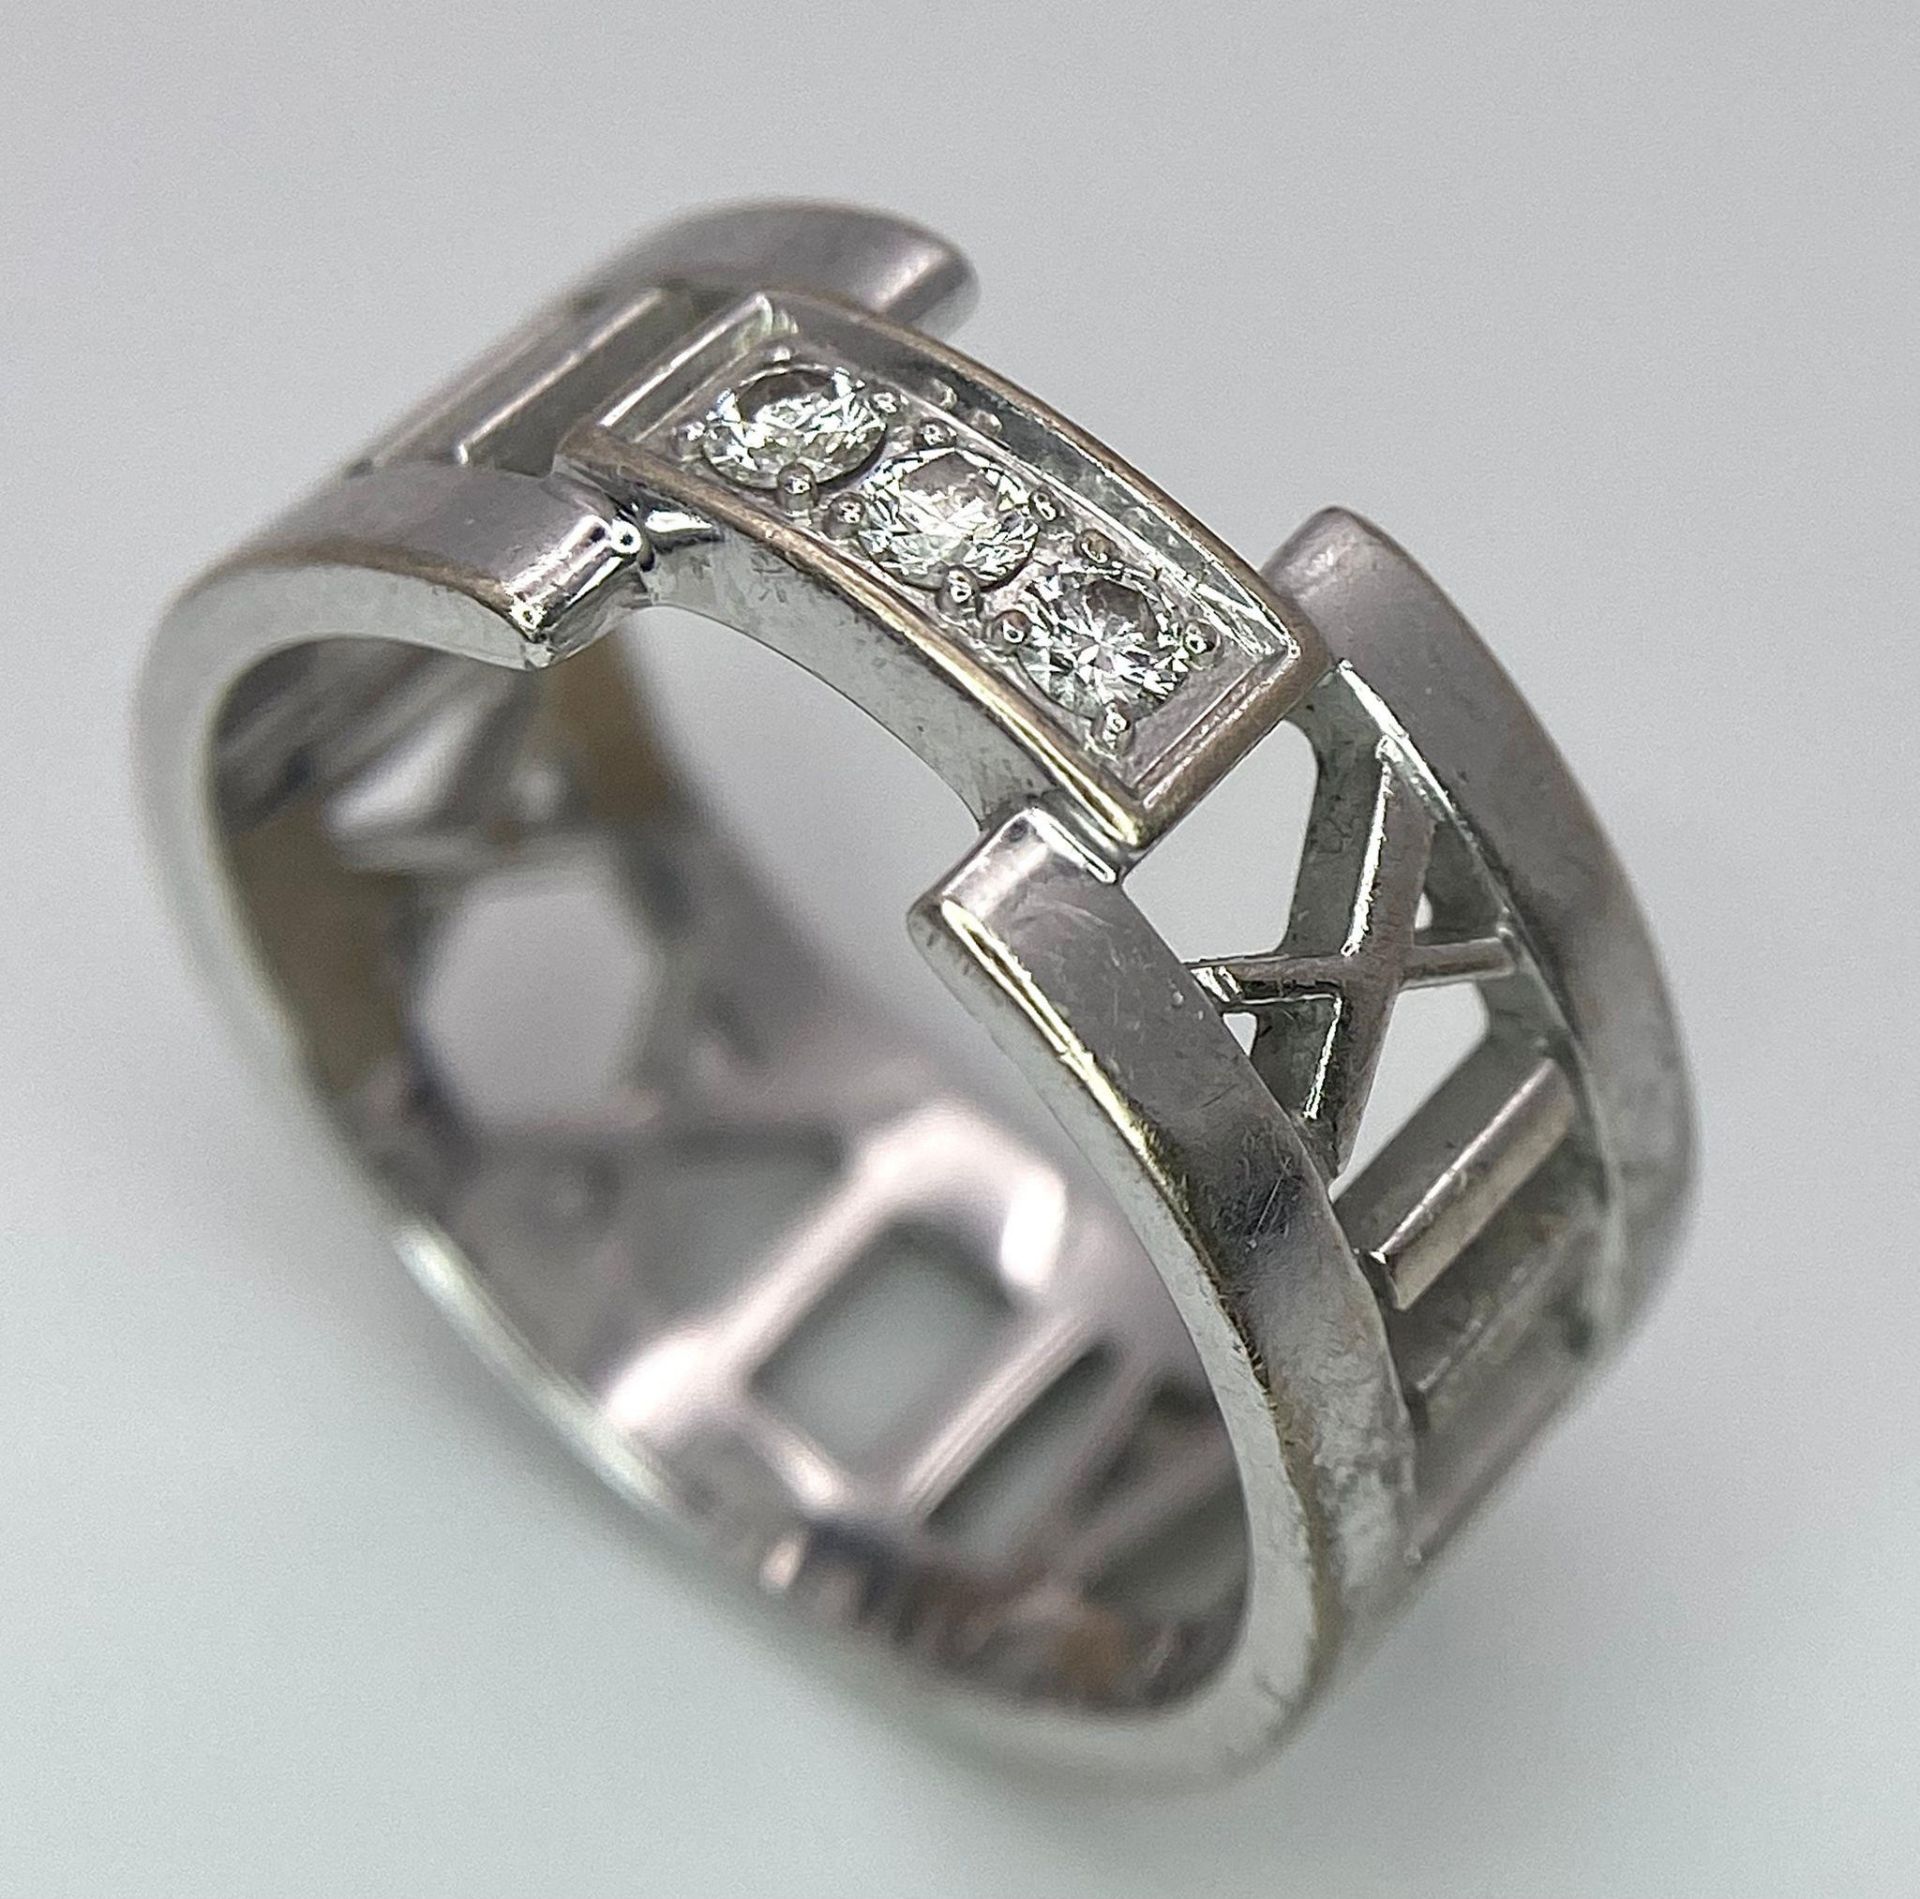 An 18K White Gold Tiffany Atlas Diamond Ring. Pierced Roman numeral decoration. Tiffany mark. Size